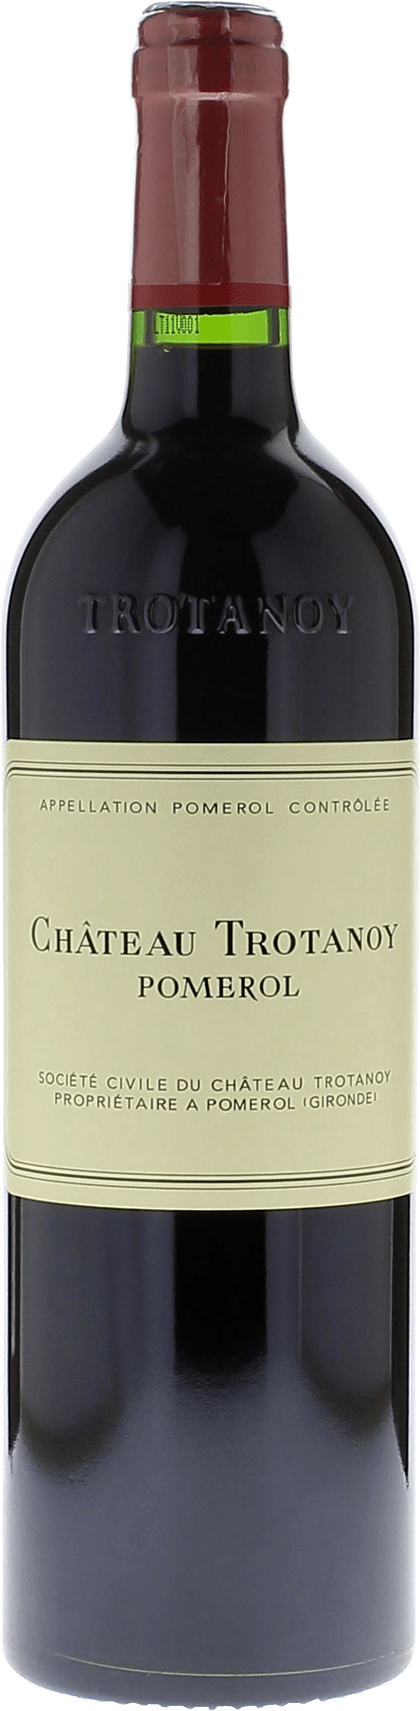 Trotanoy 2003  Pomerol, Bordeaux rouge